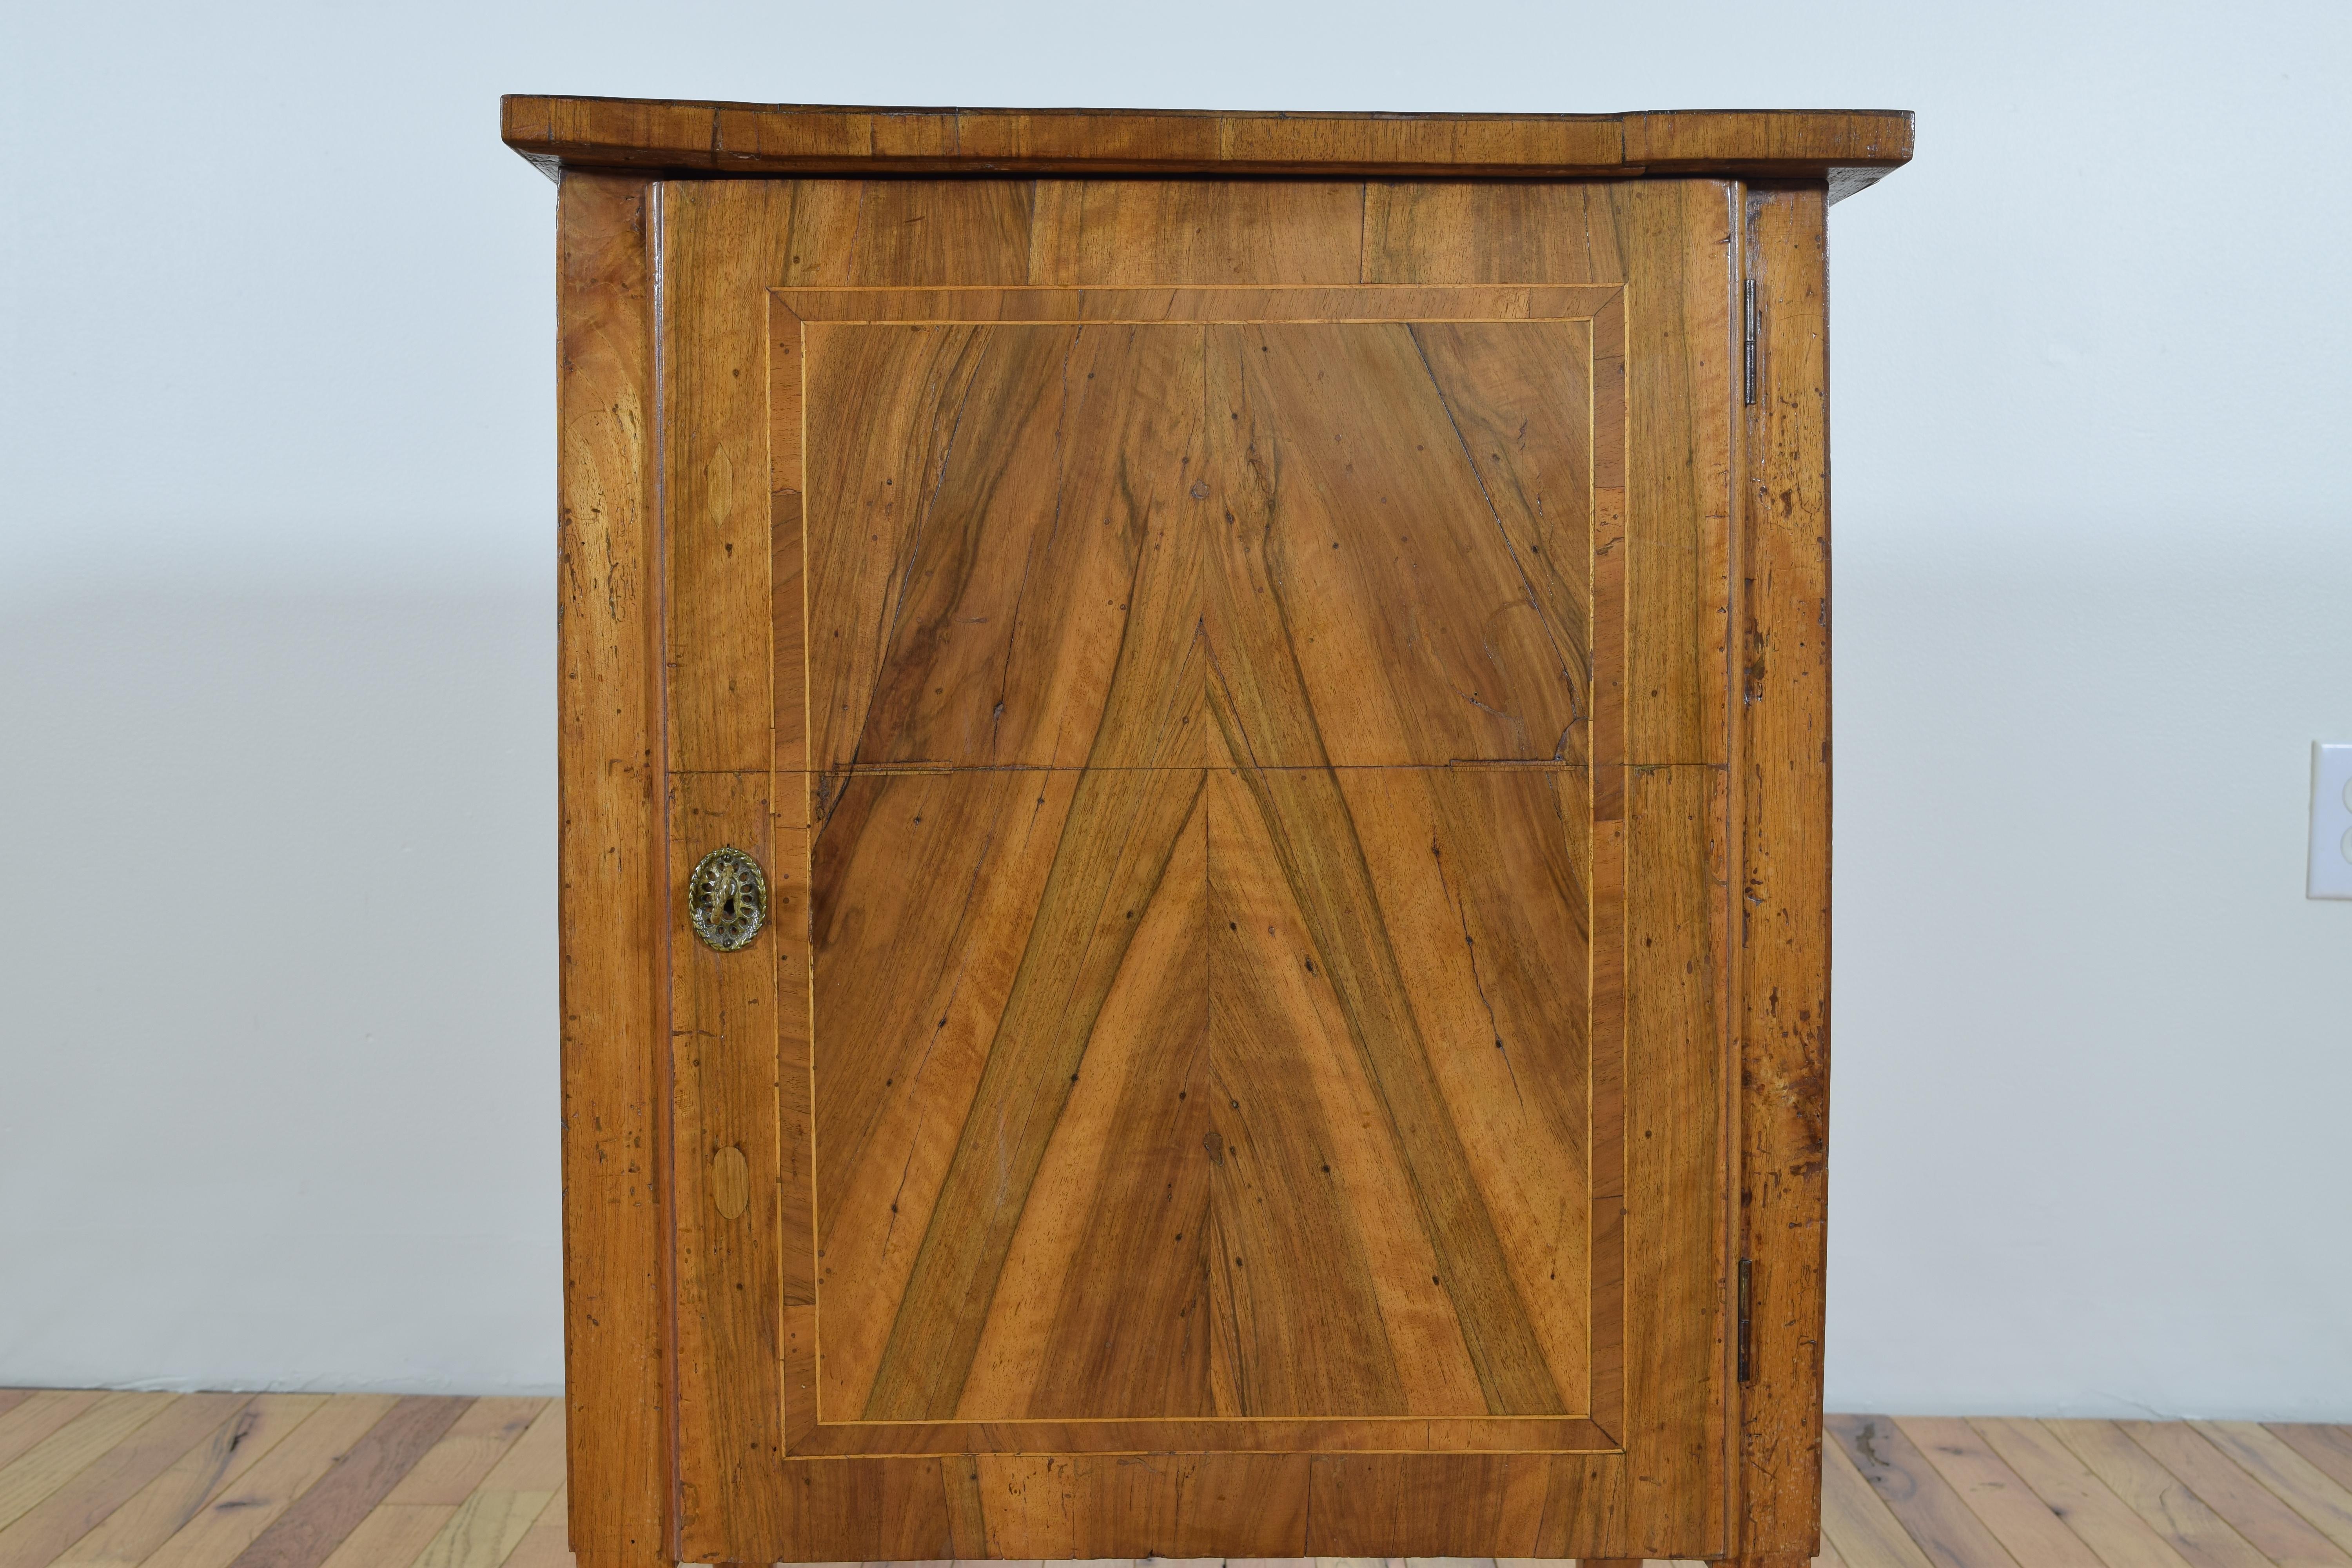 Neoclassical Period Walnut Inlaid and Walnut 1-Door Cabinet, Late 18th Century (18. Jahrhundert)